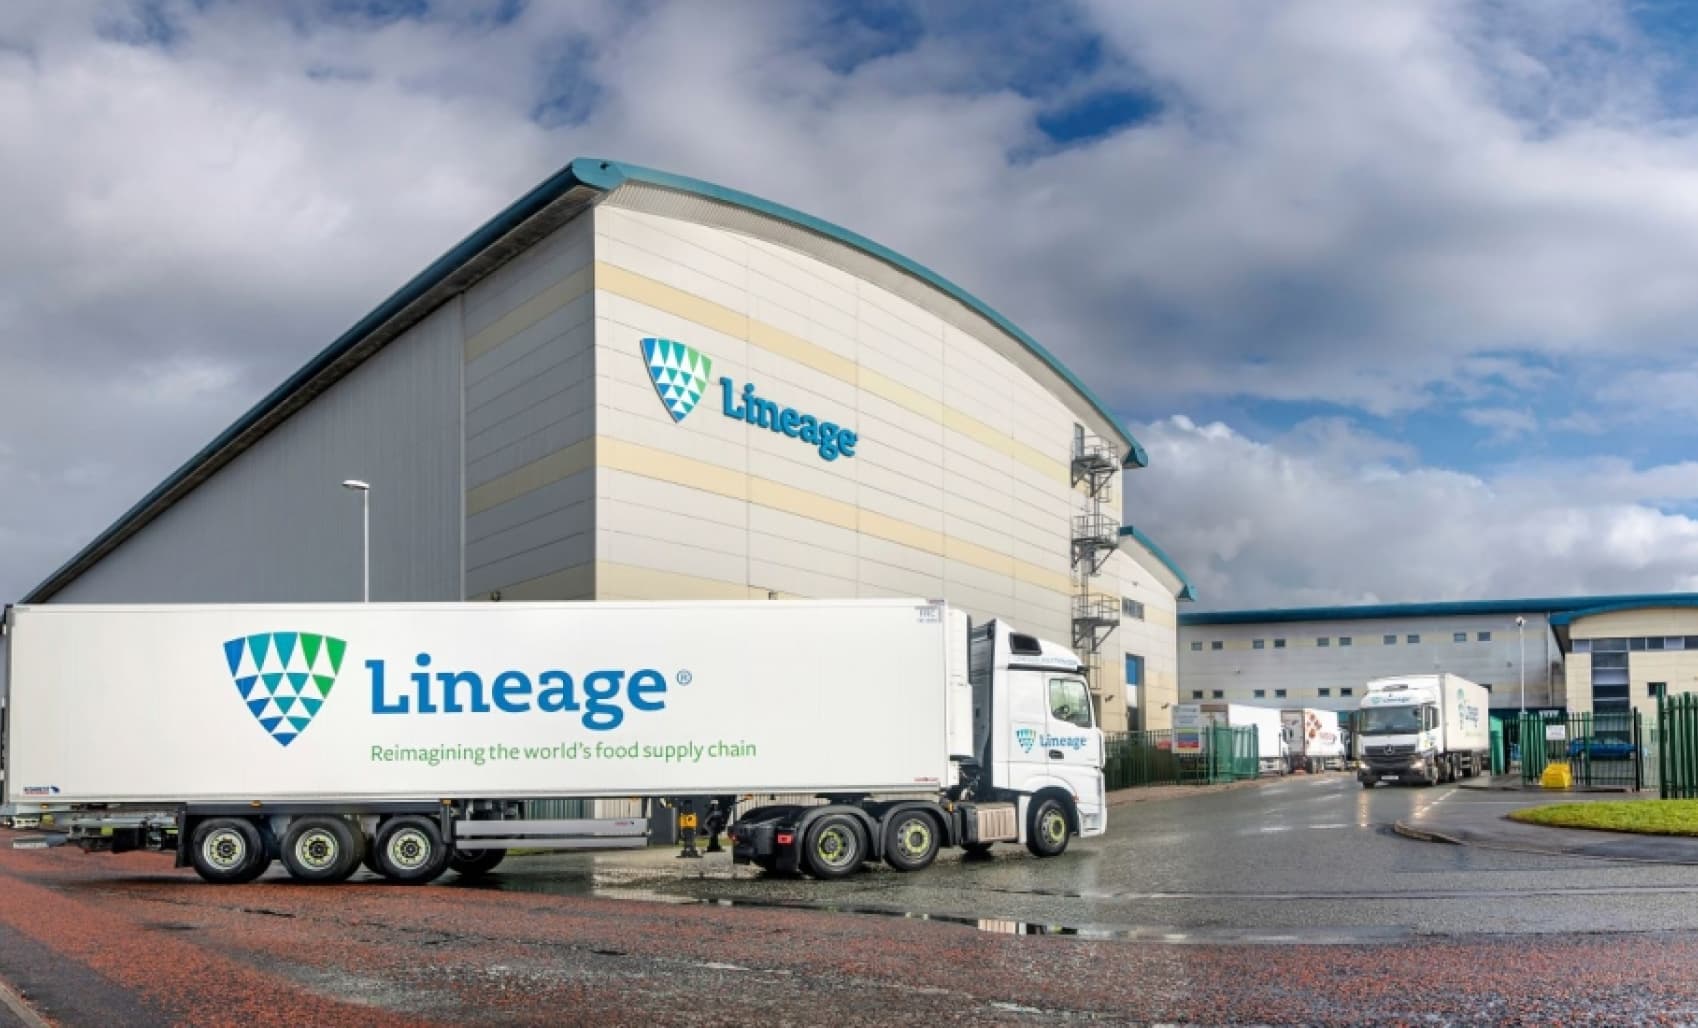 lineage logistics case study